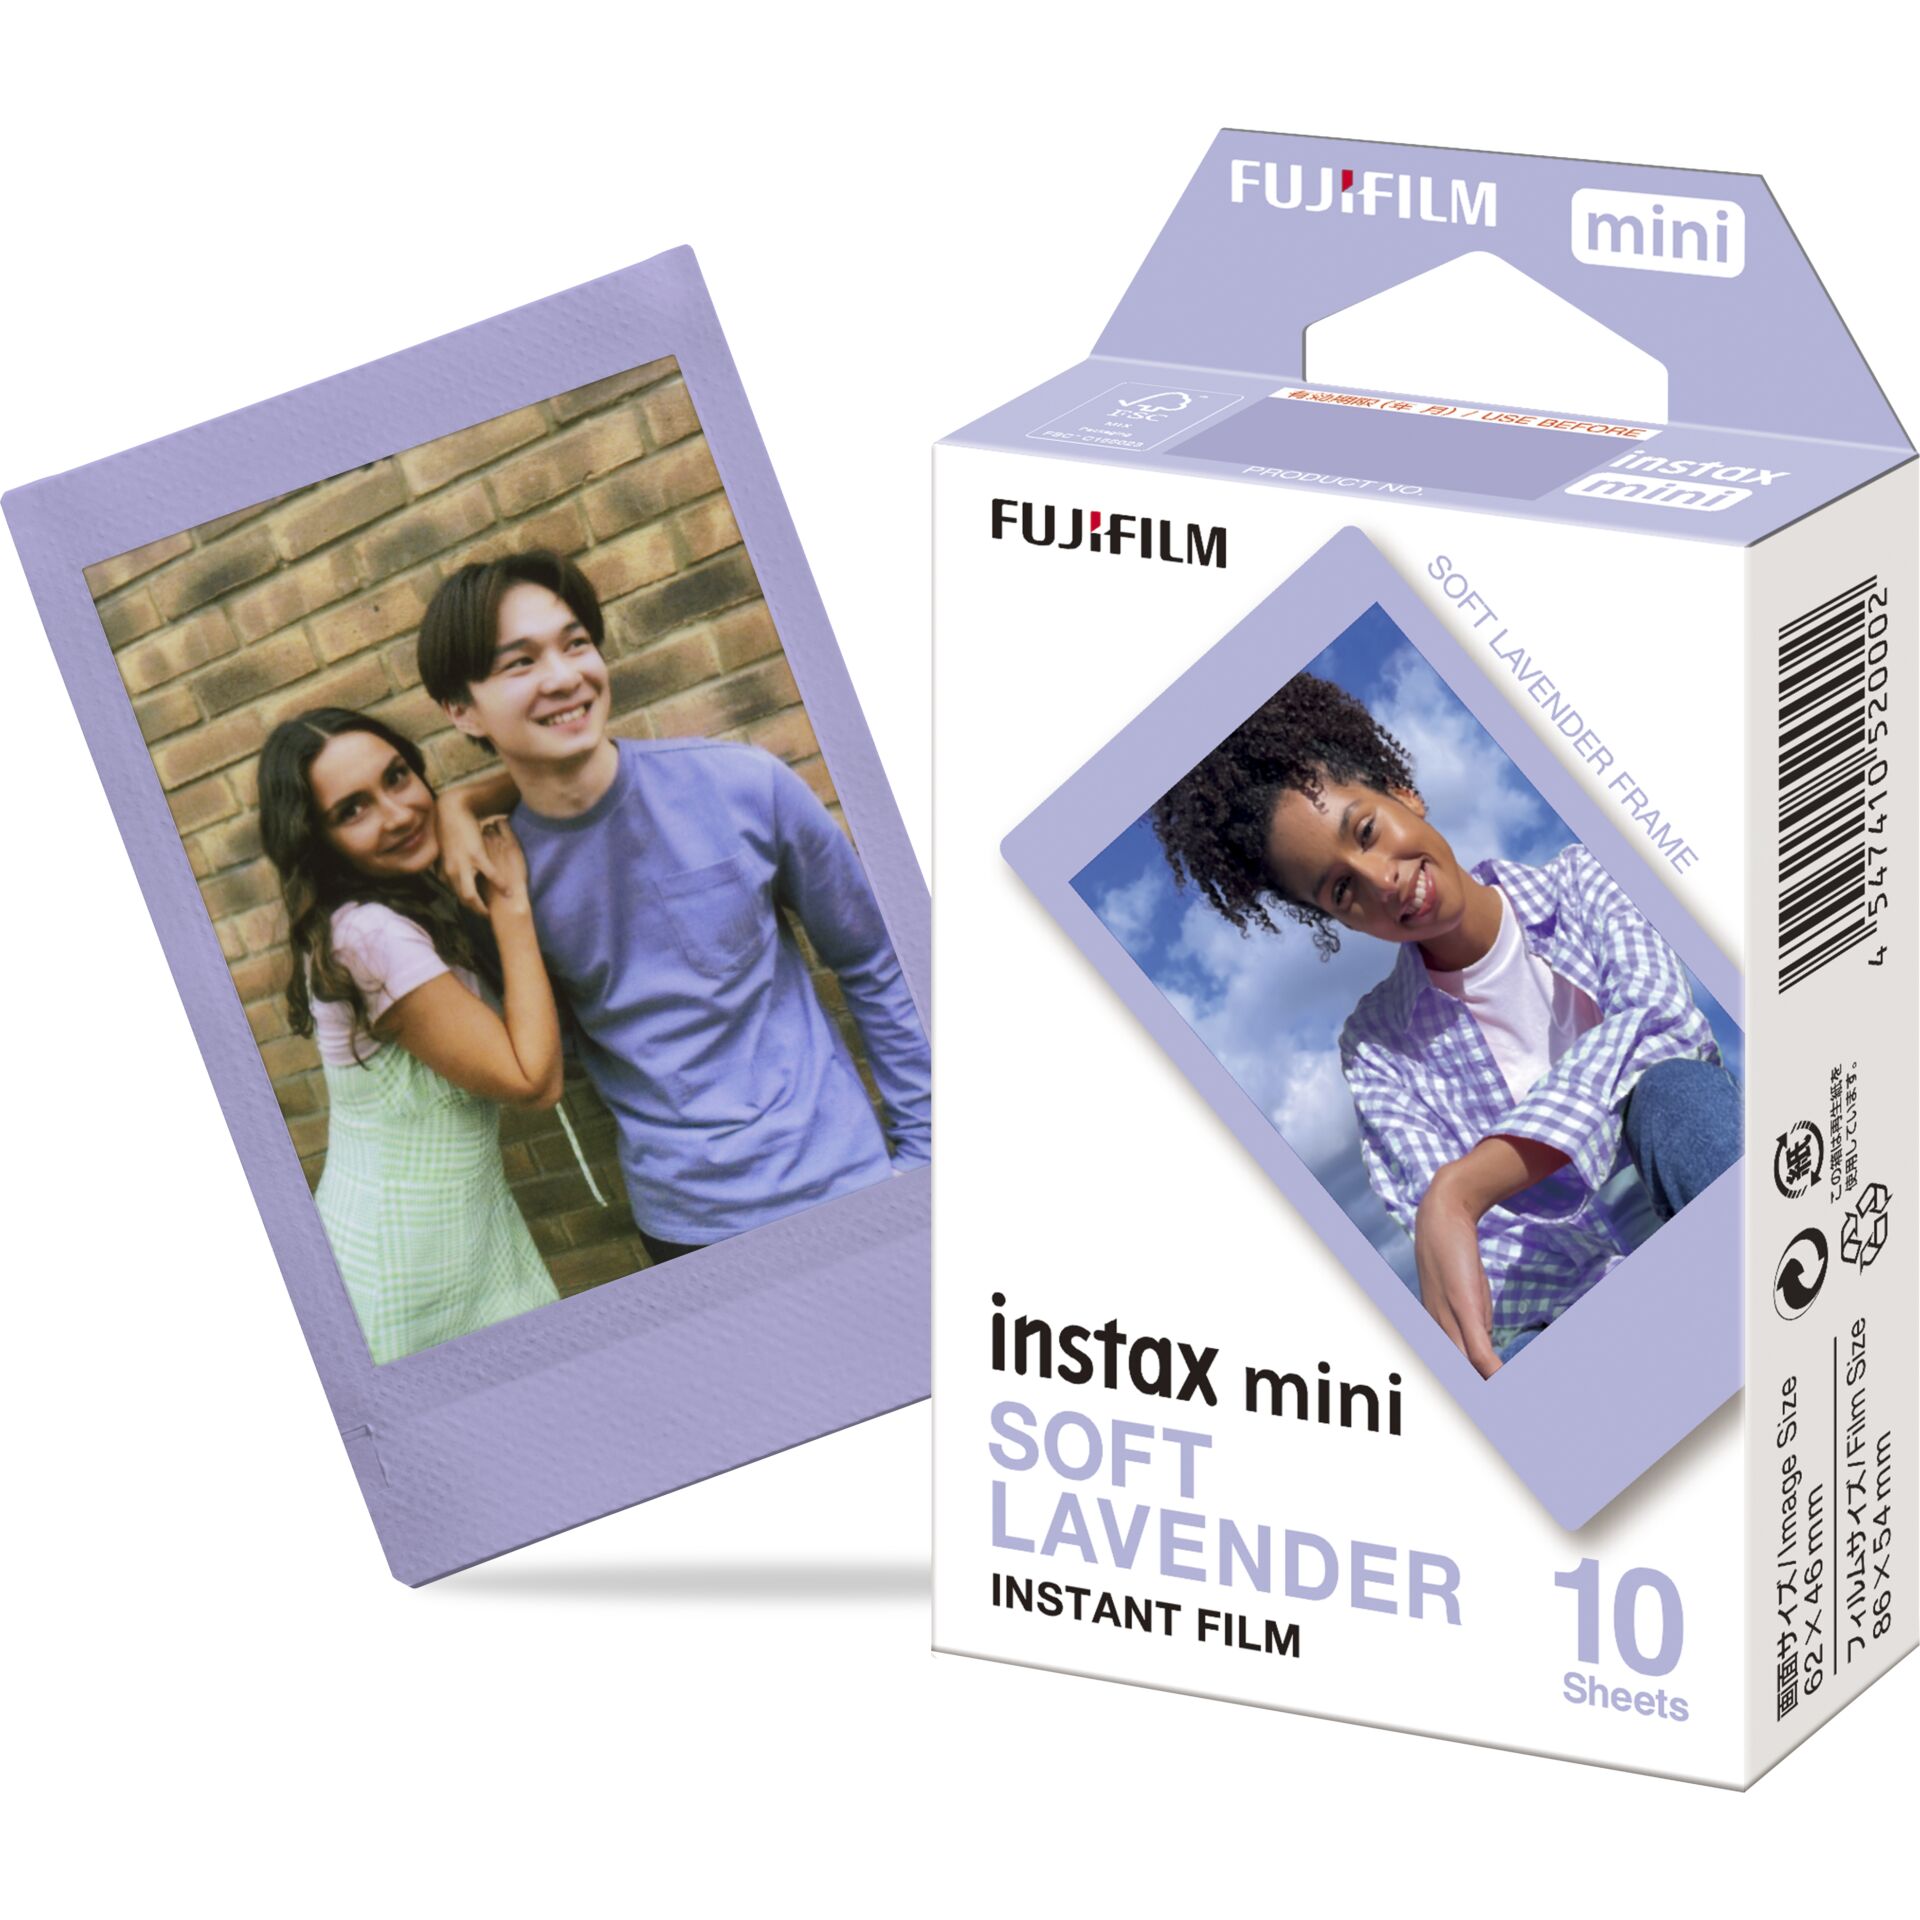 Fujifilm instax mini Film soft lavender